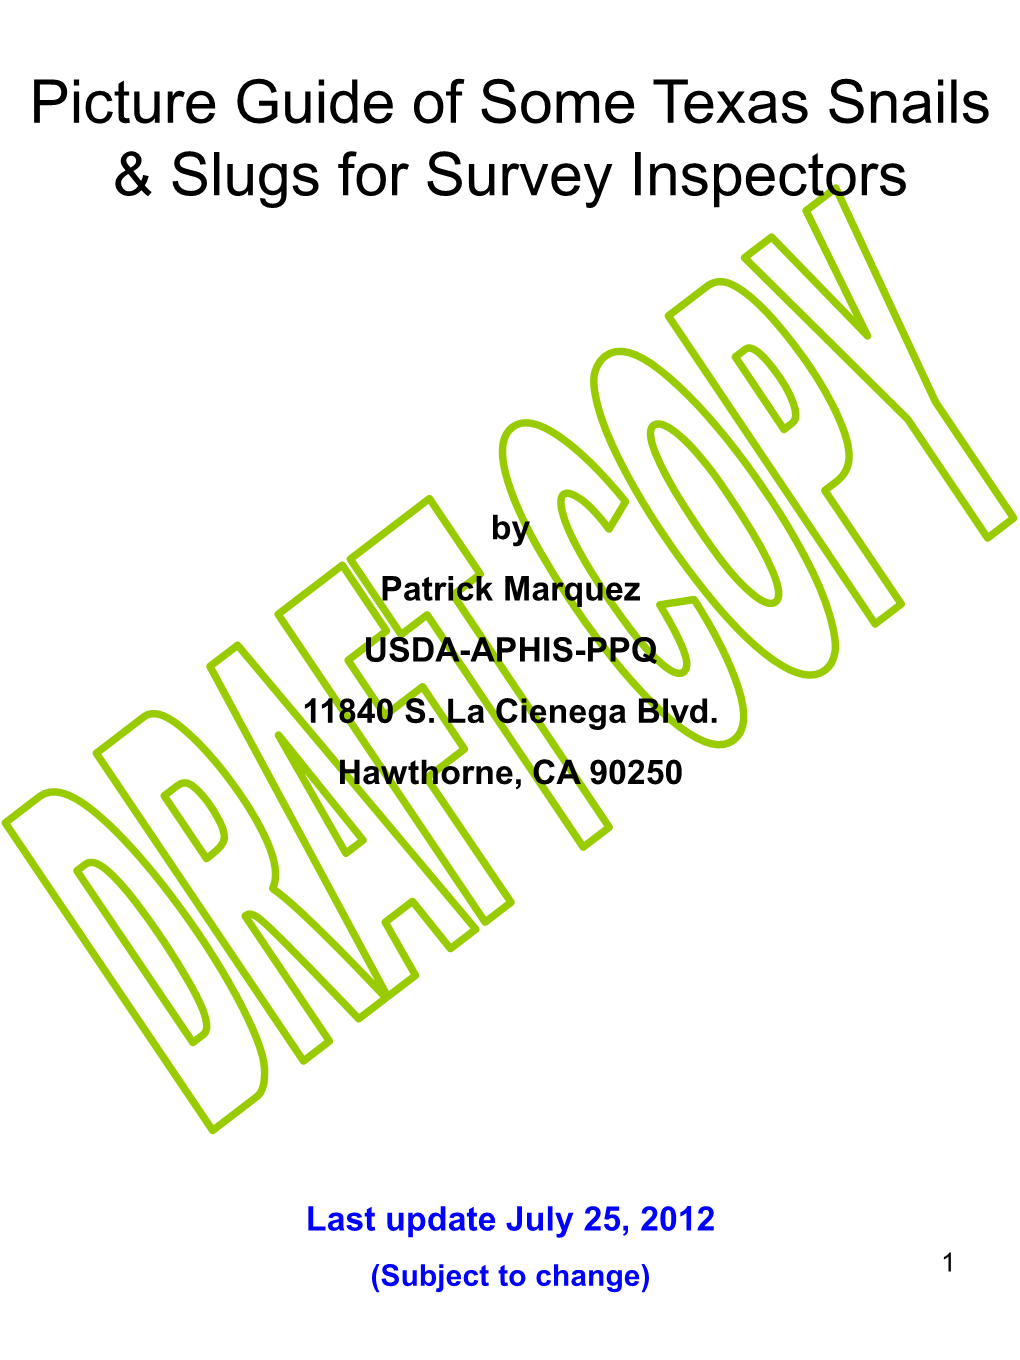 Picture Guide of Some Texas Snails & Slugs for Survey Inspectors